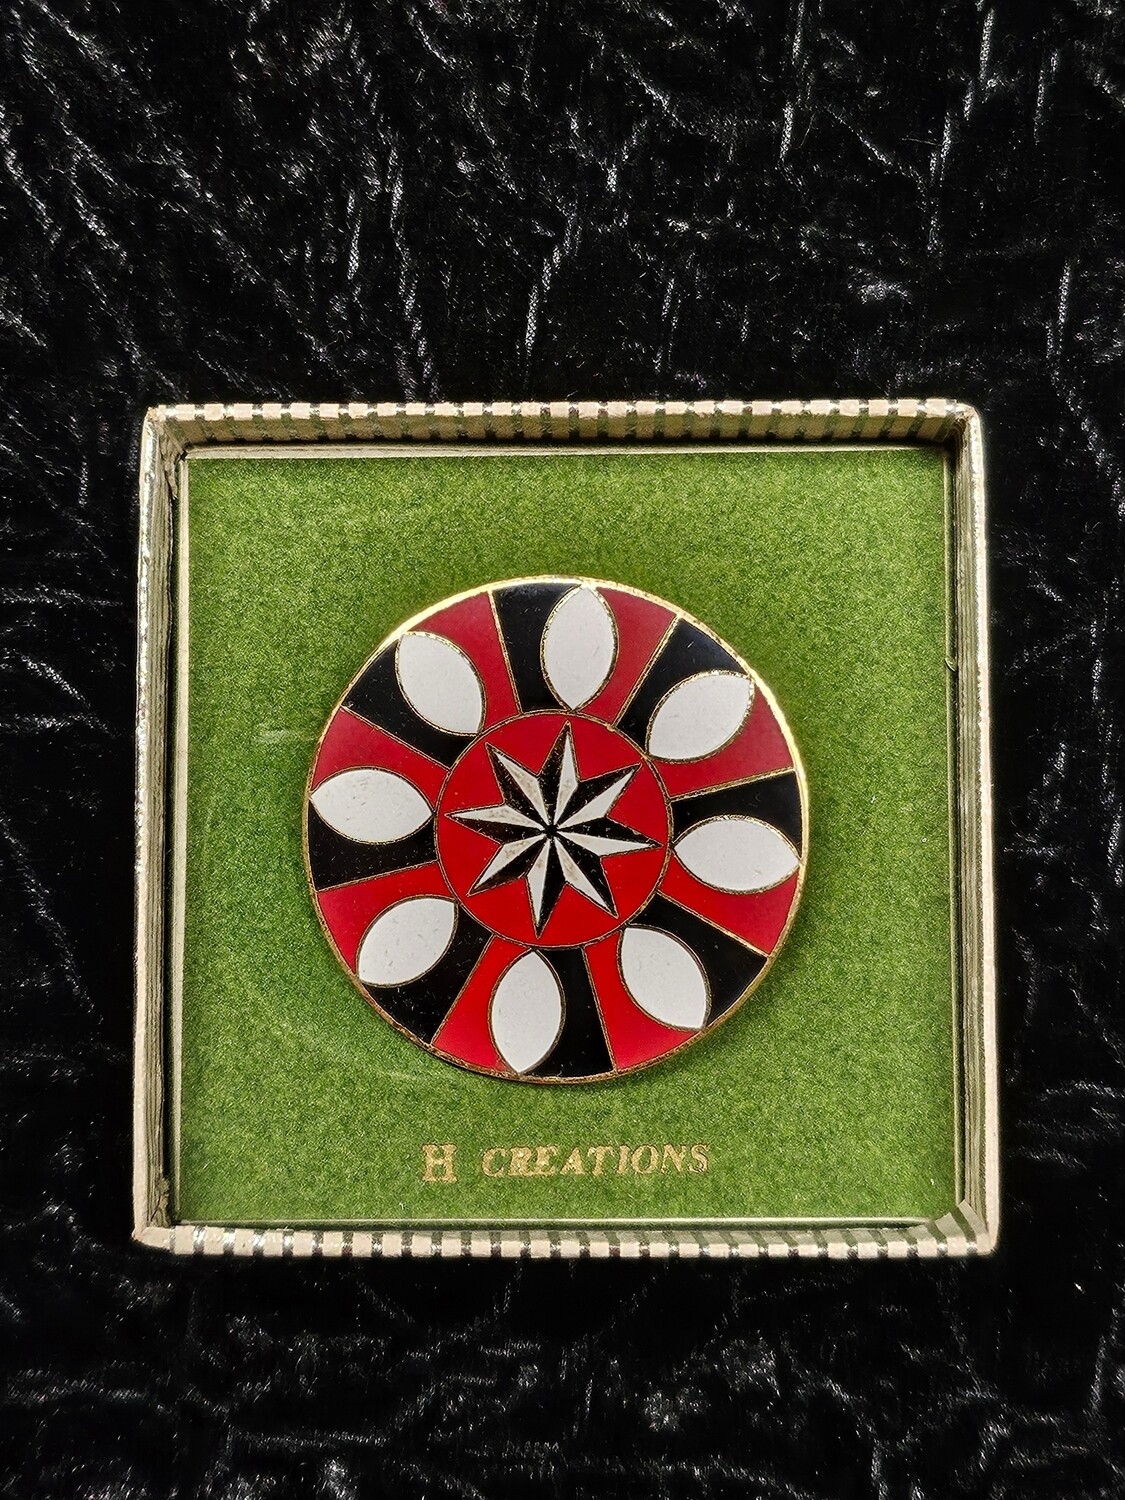 Vintage Goodwill and Abundance pin